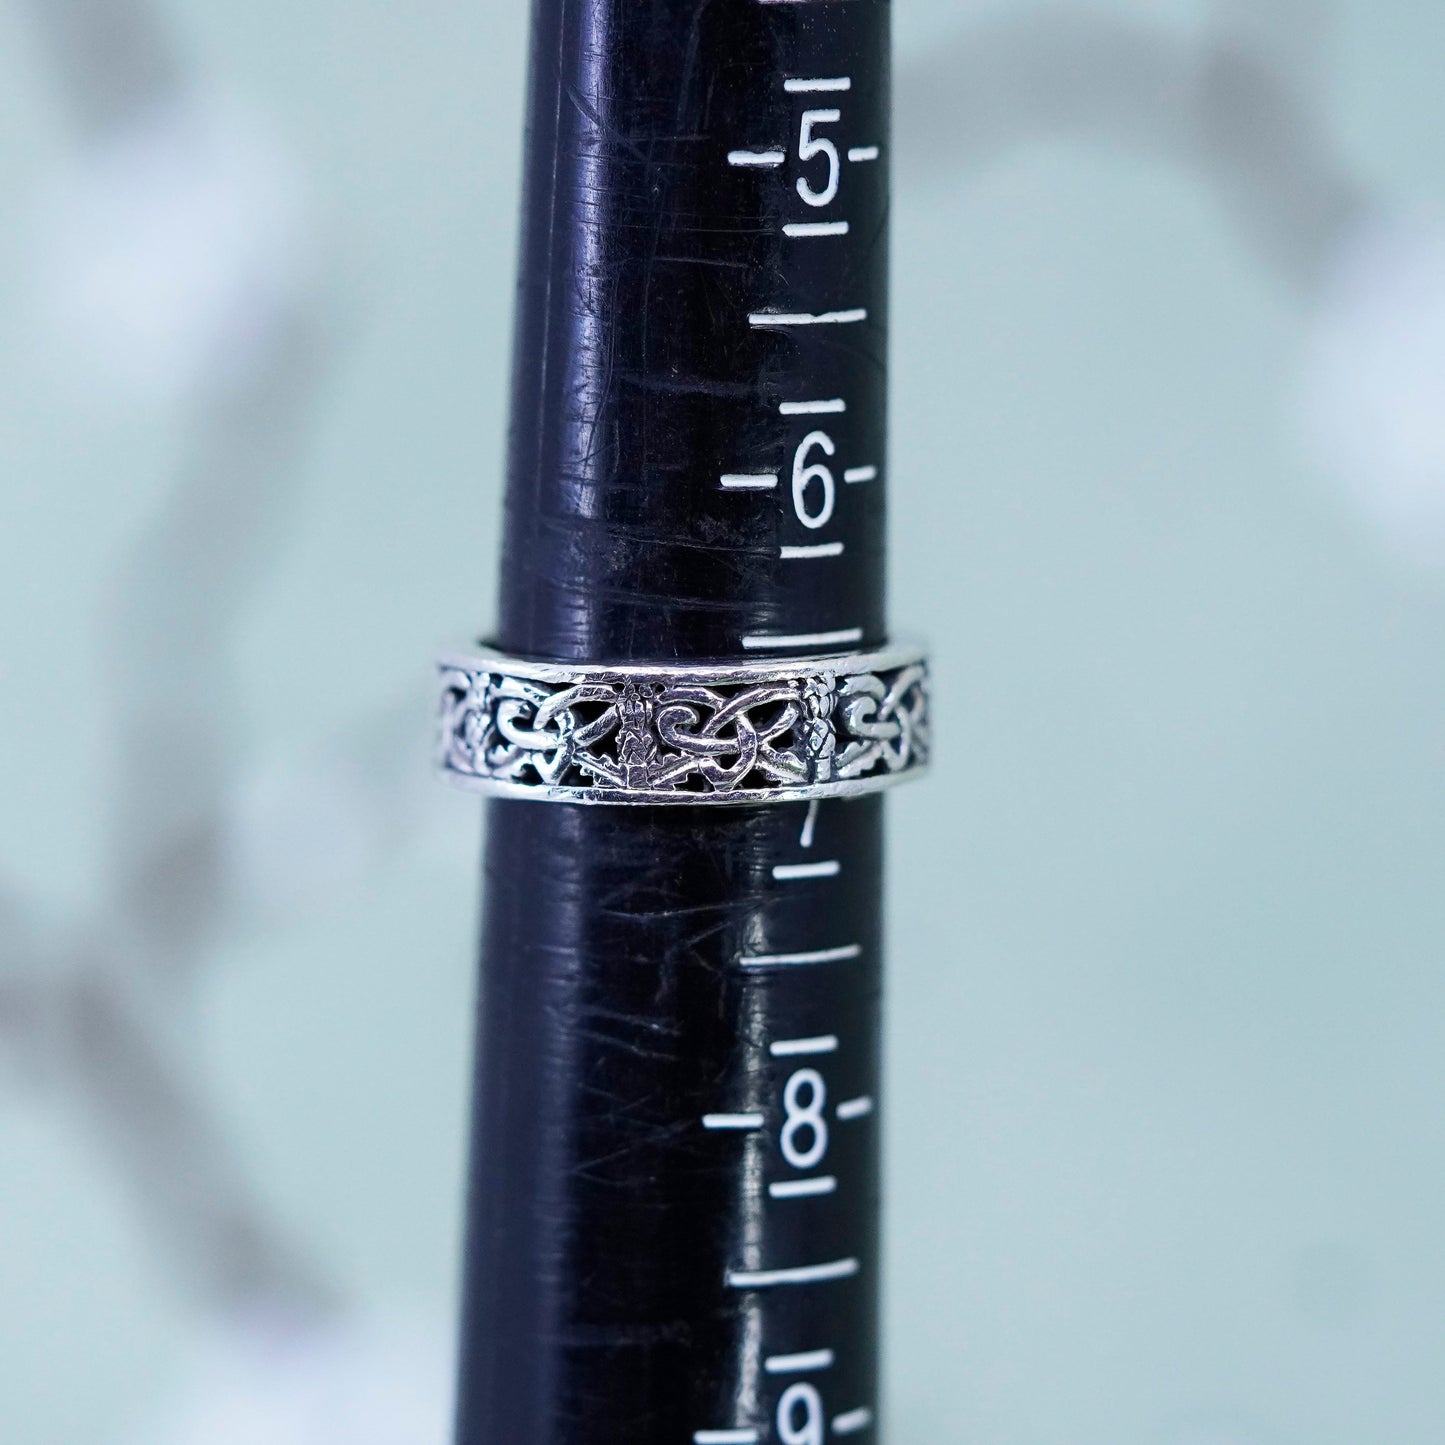 Size 6.5, Vintage sterling silver handmade filigree ring, 925 irish knot band